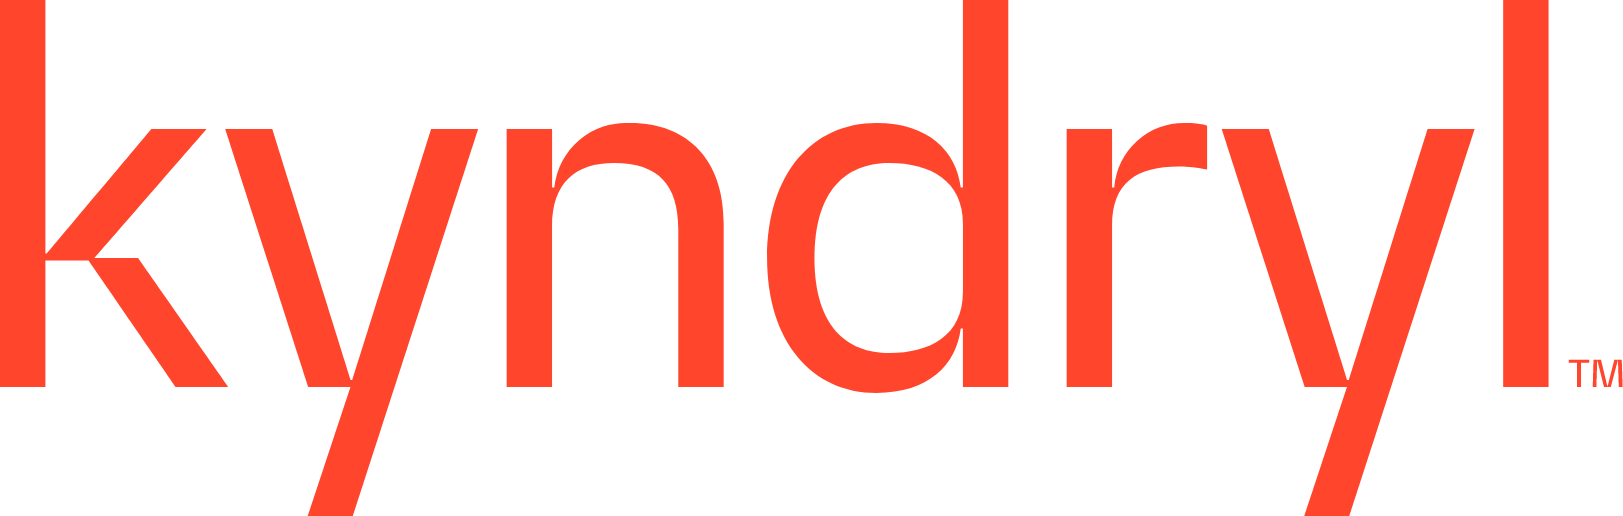 Kyndryl logo large (transparent PNG)